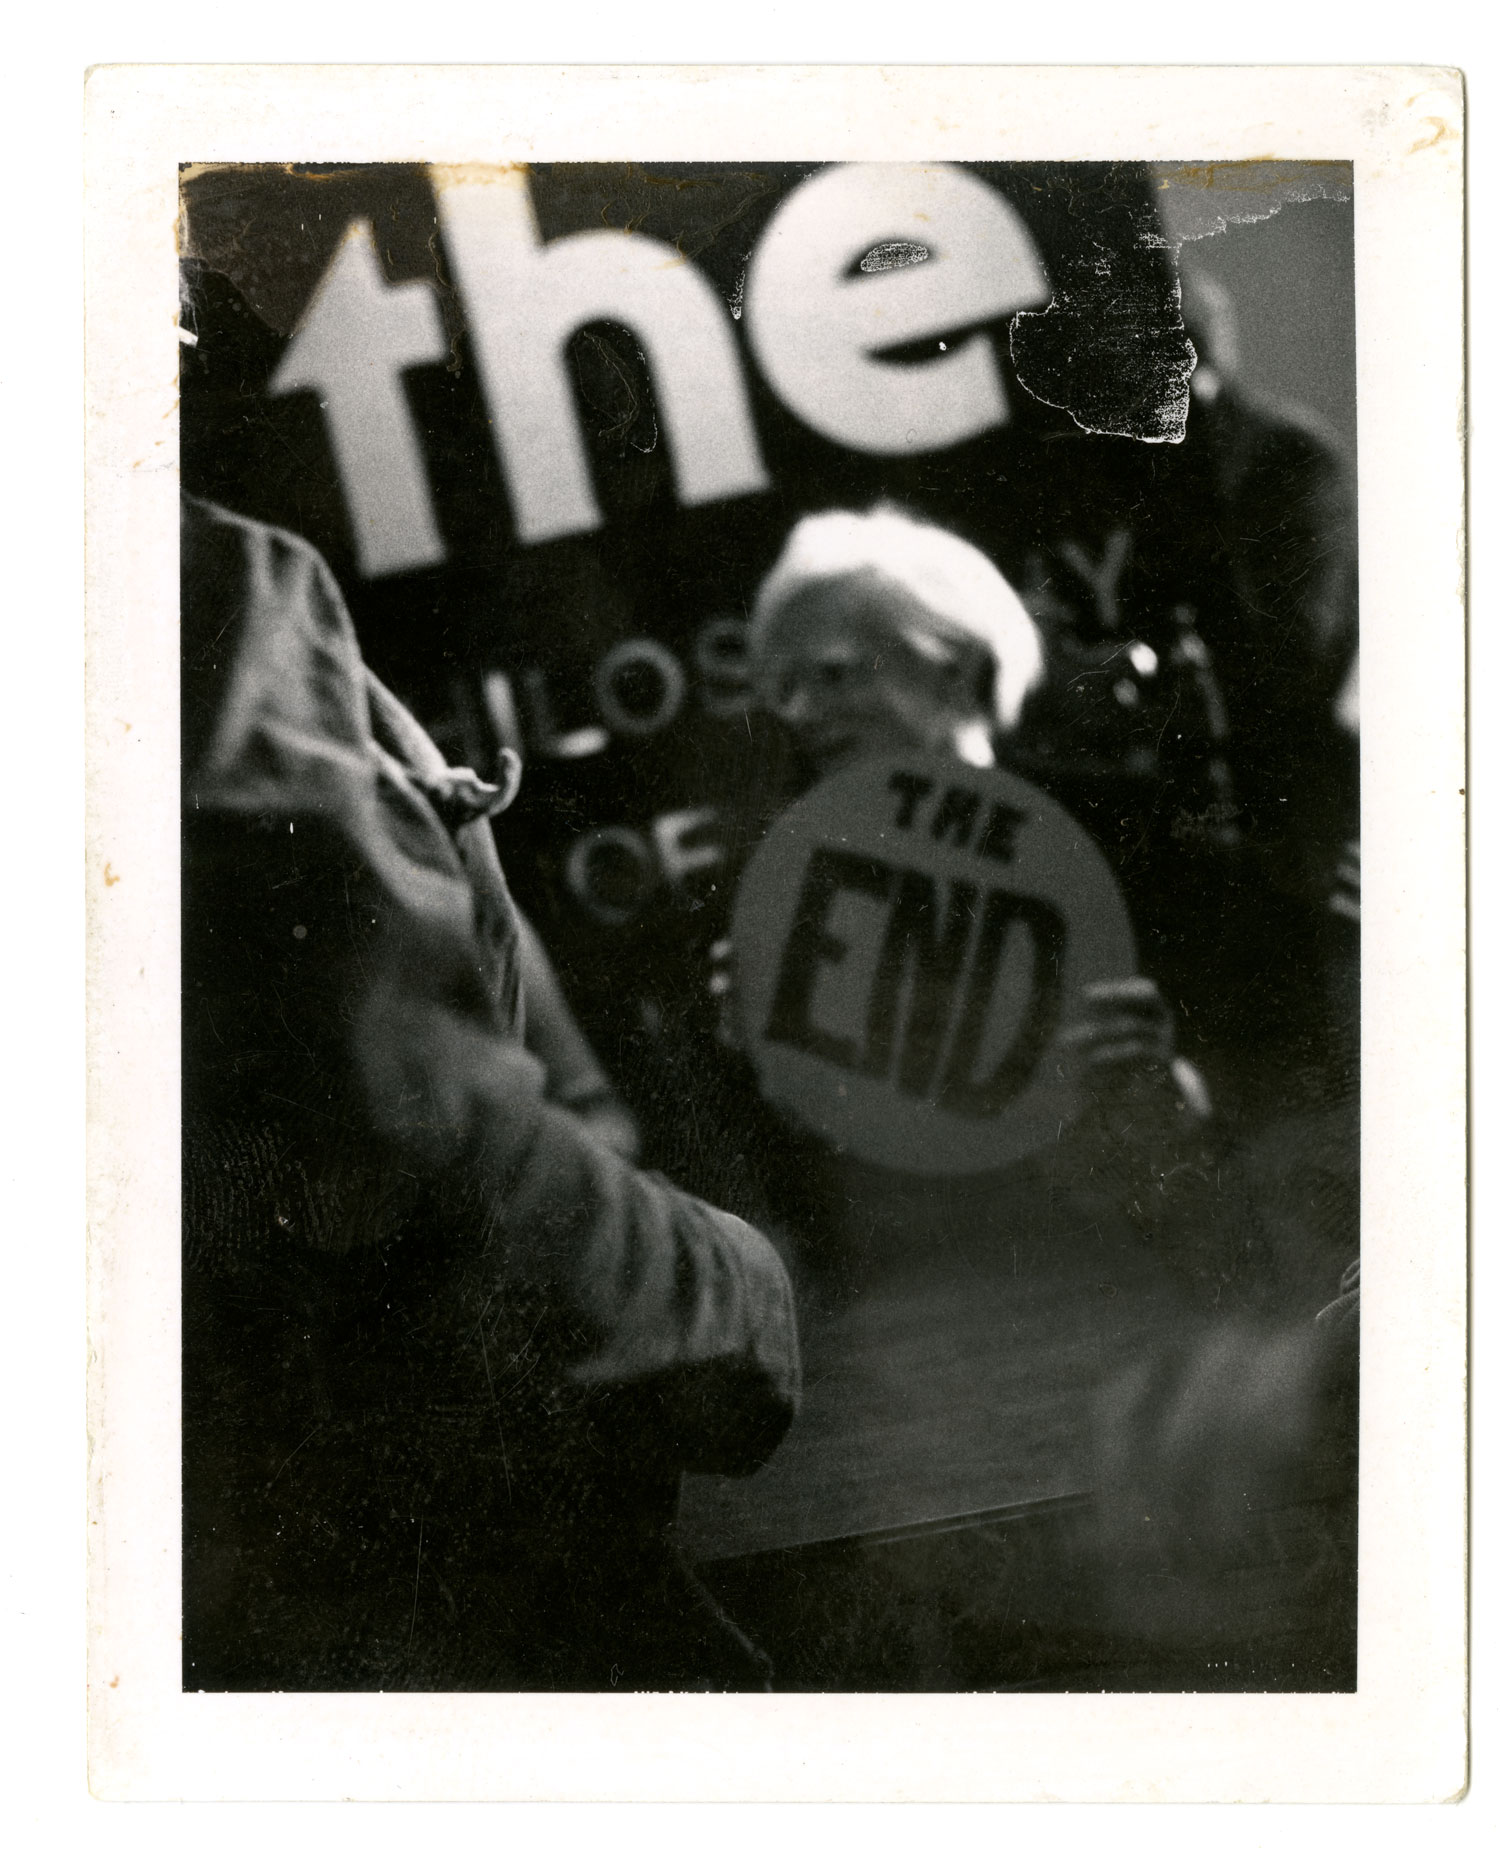 Andy Warhol booksigning, 1025 F Street N.W.; October 8, 1975. © Chris Earnshaw